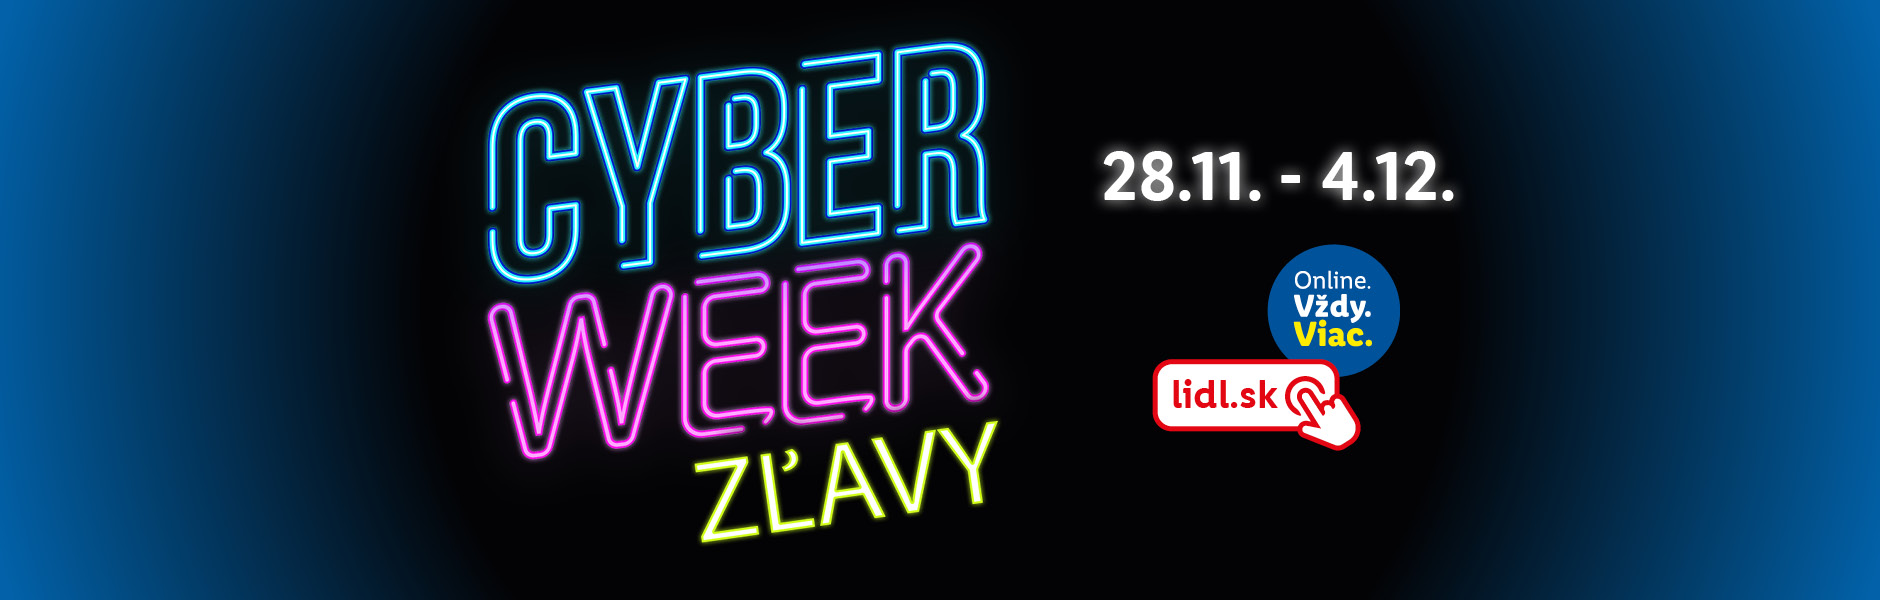 Cyber week zľavy